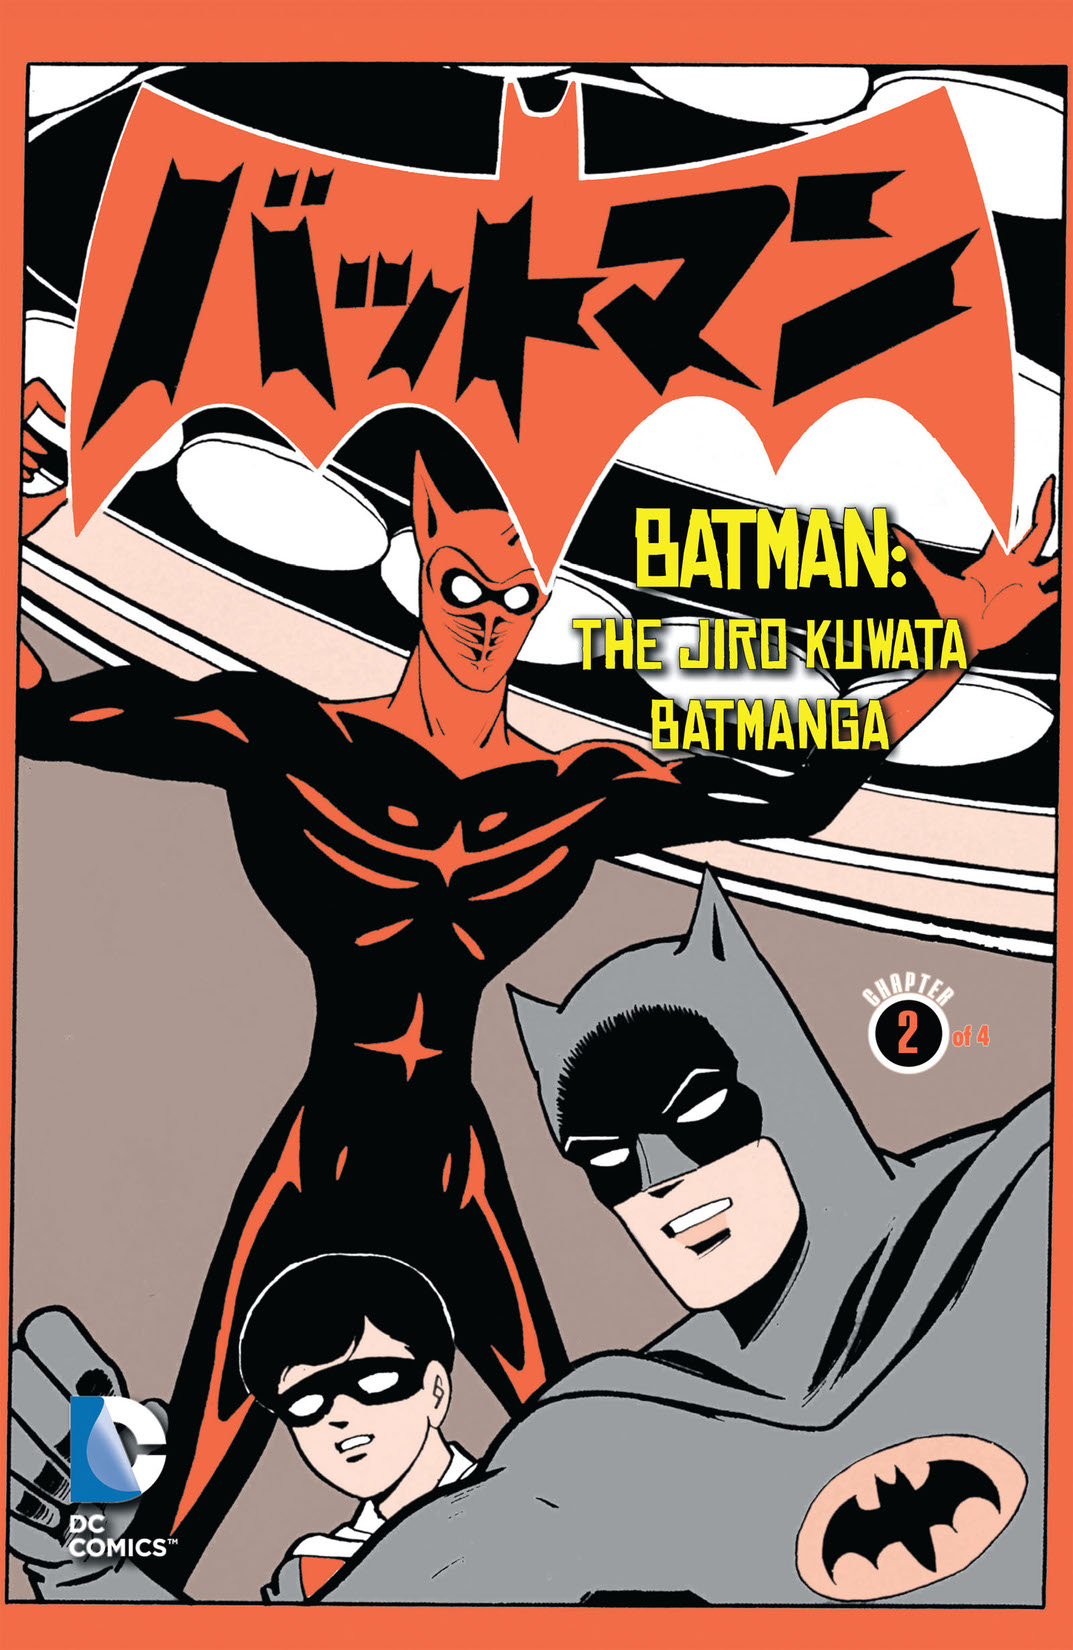 Batman: The Jiro Kuwata Batmanga #17 preview images